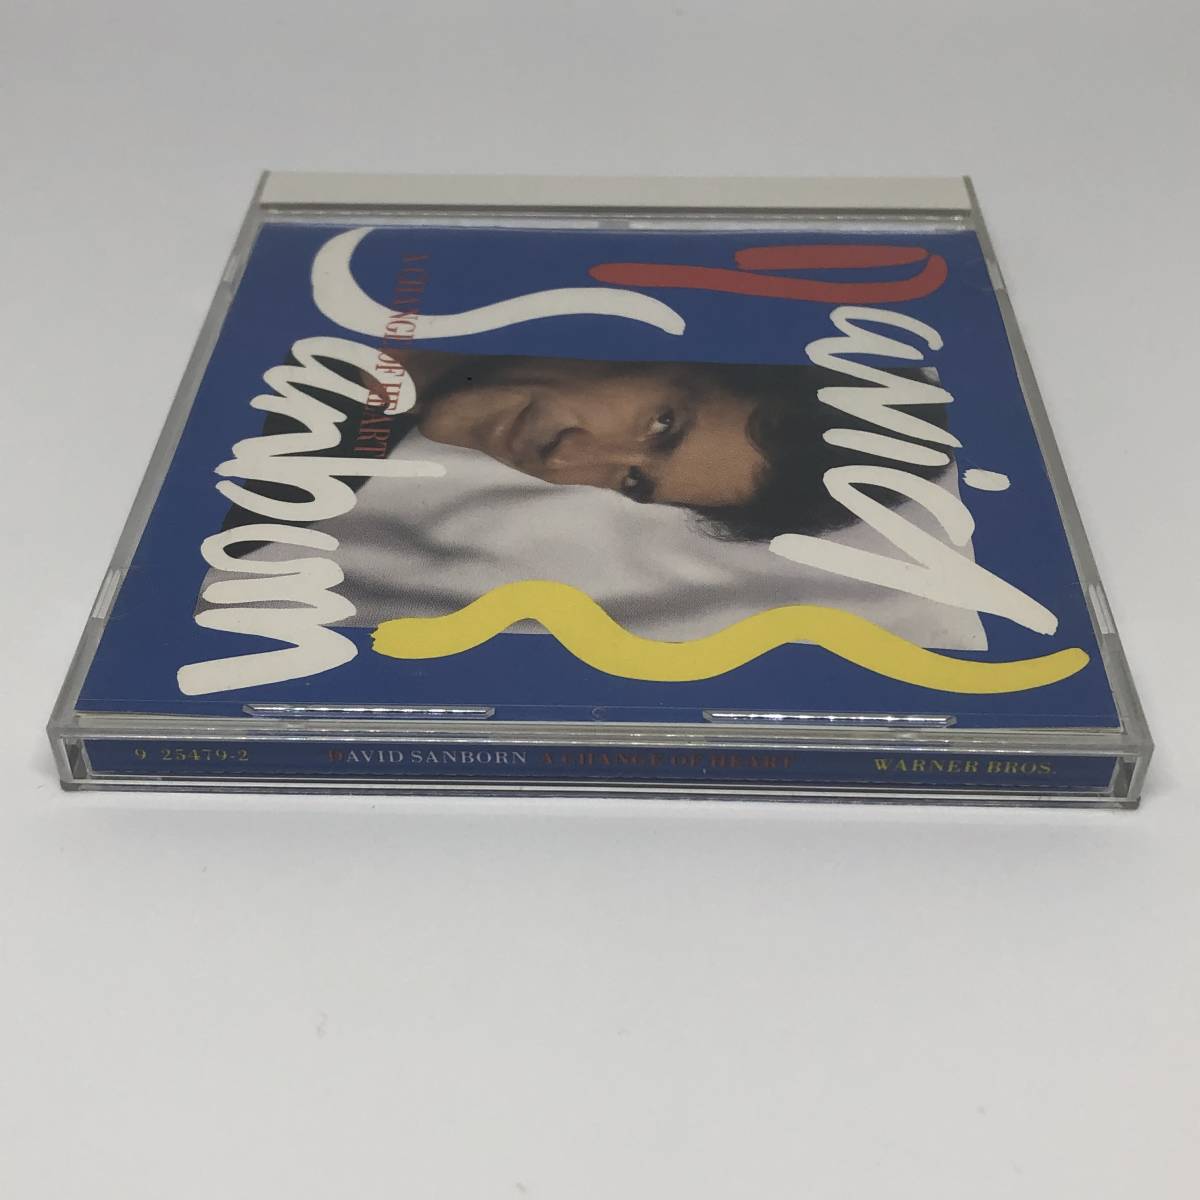 US盤 中古CD David Sanborn A Change Of Heart デイヴィッド・サンボーン チェンジ・オブ・ハート Warner Bros. 9 25479-2_画像4